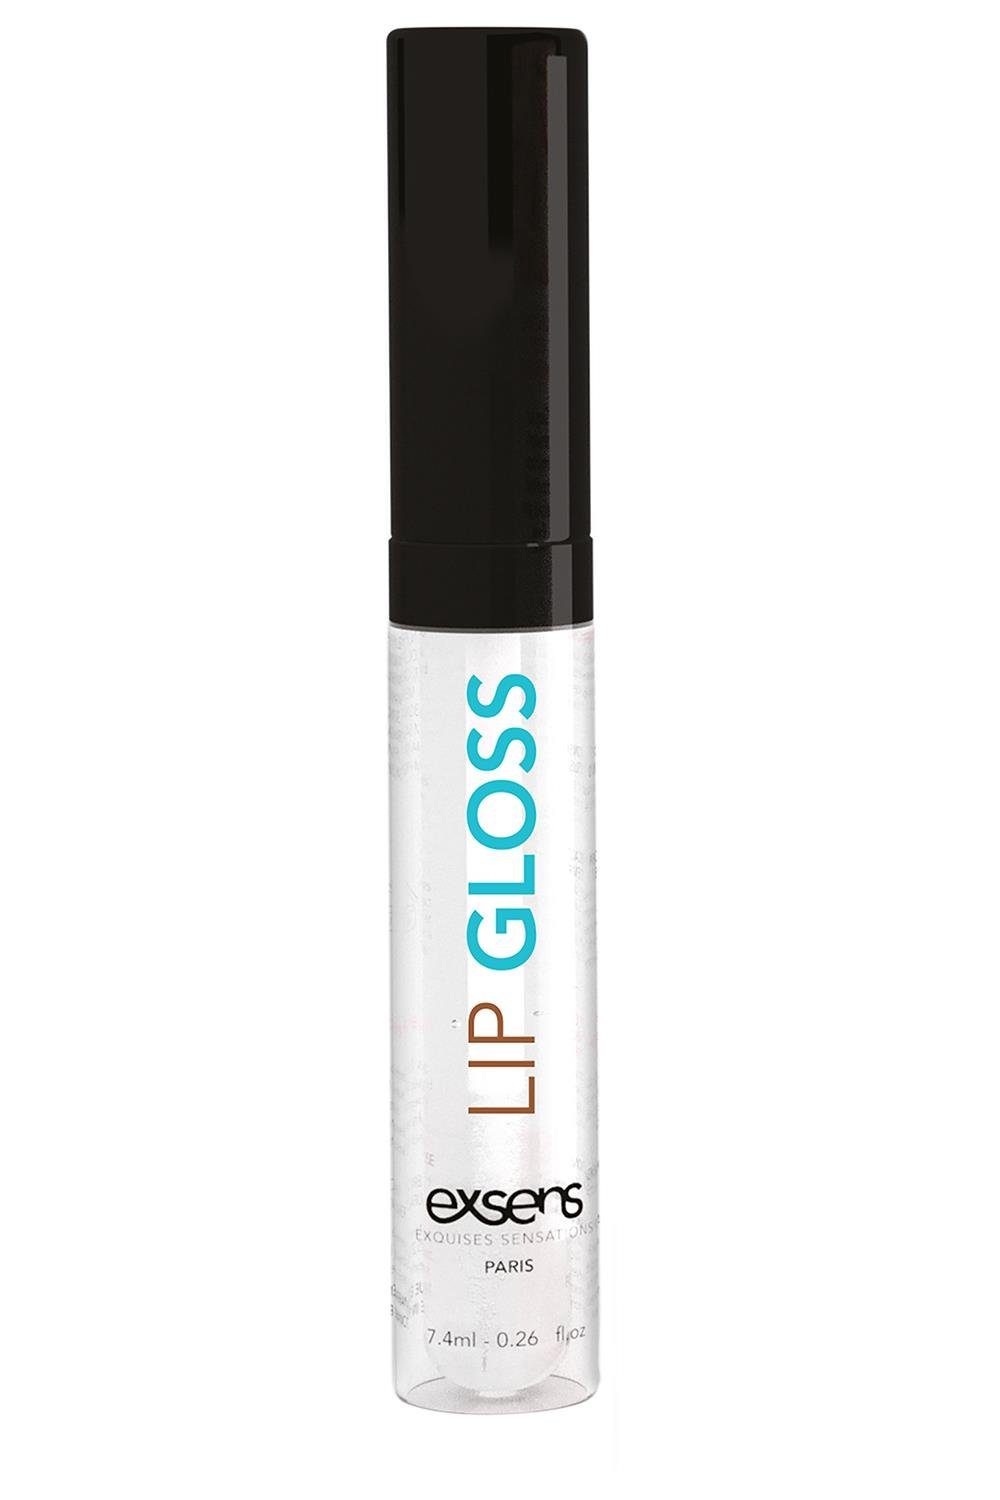 Exsens Lipgloss Exsens Hot Kiss Lip Gloss Coconut 7,4ml, Farblos, nicht klebrig | Lipgloss